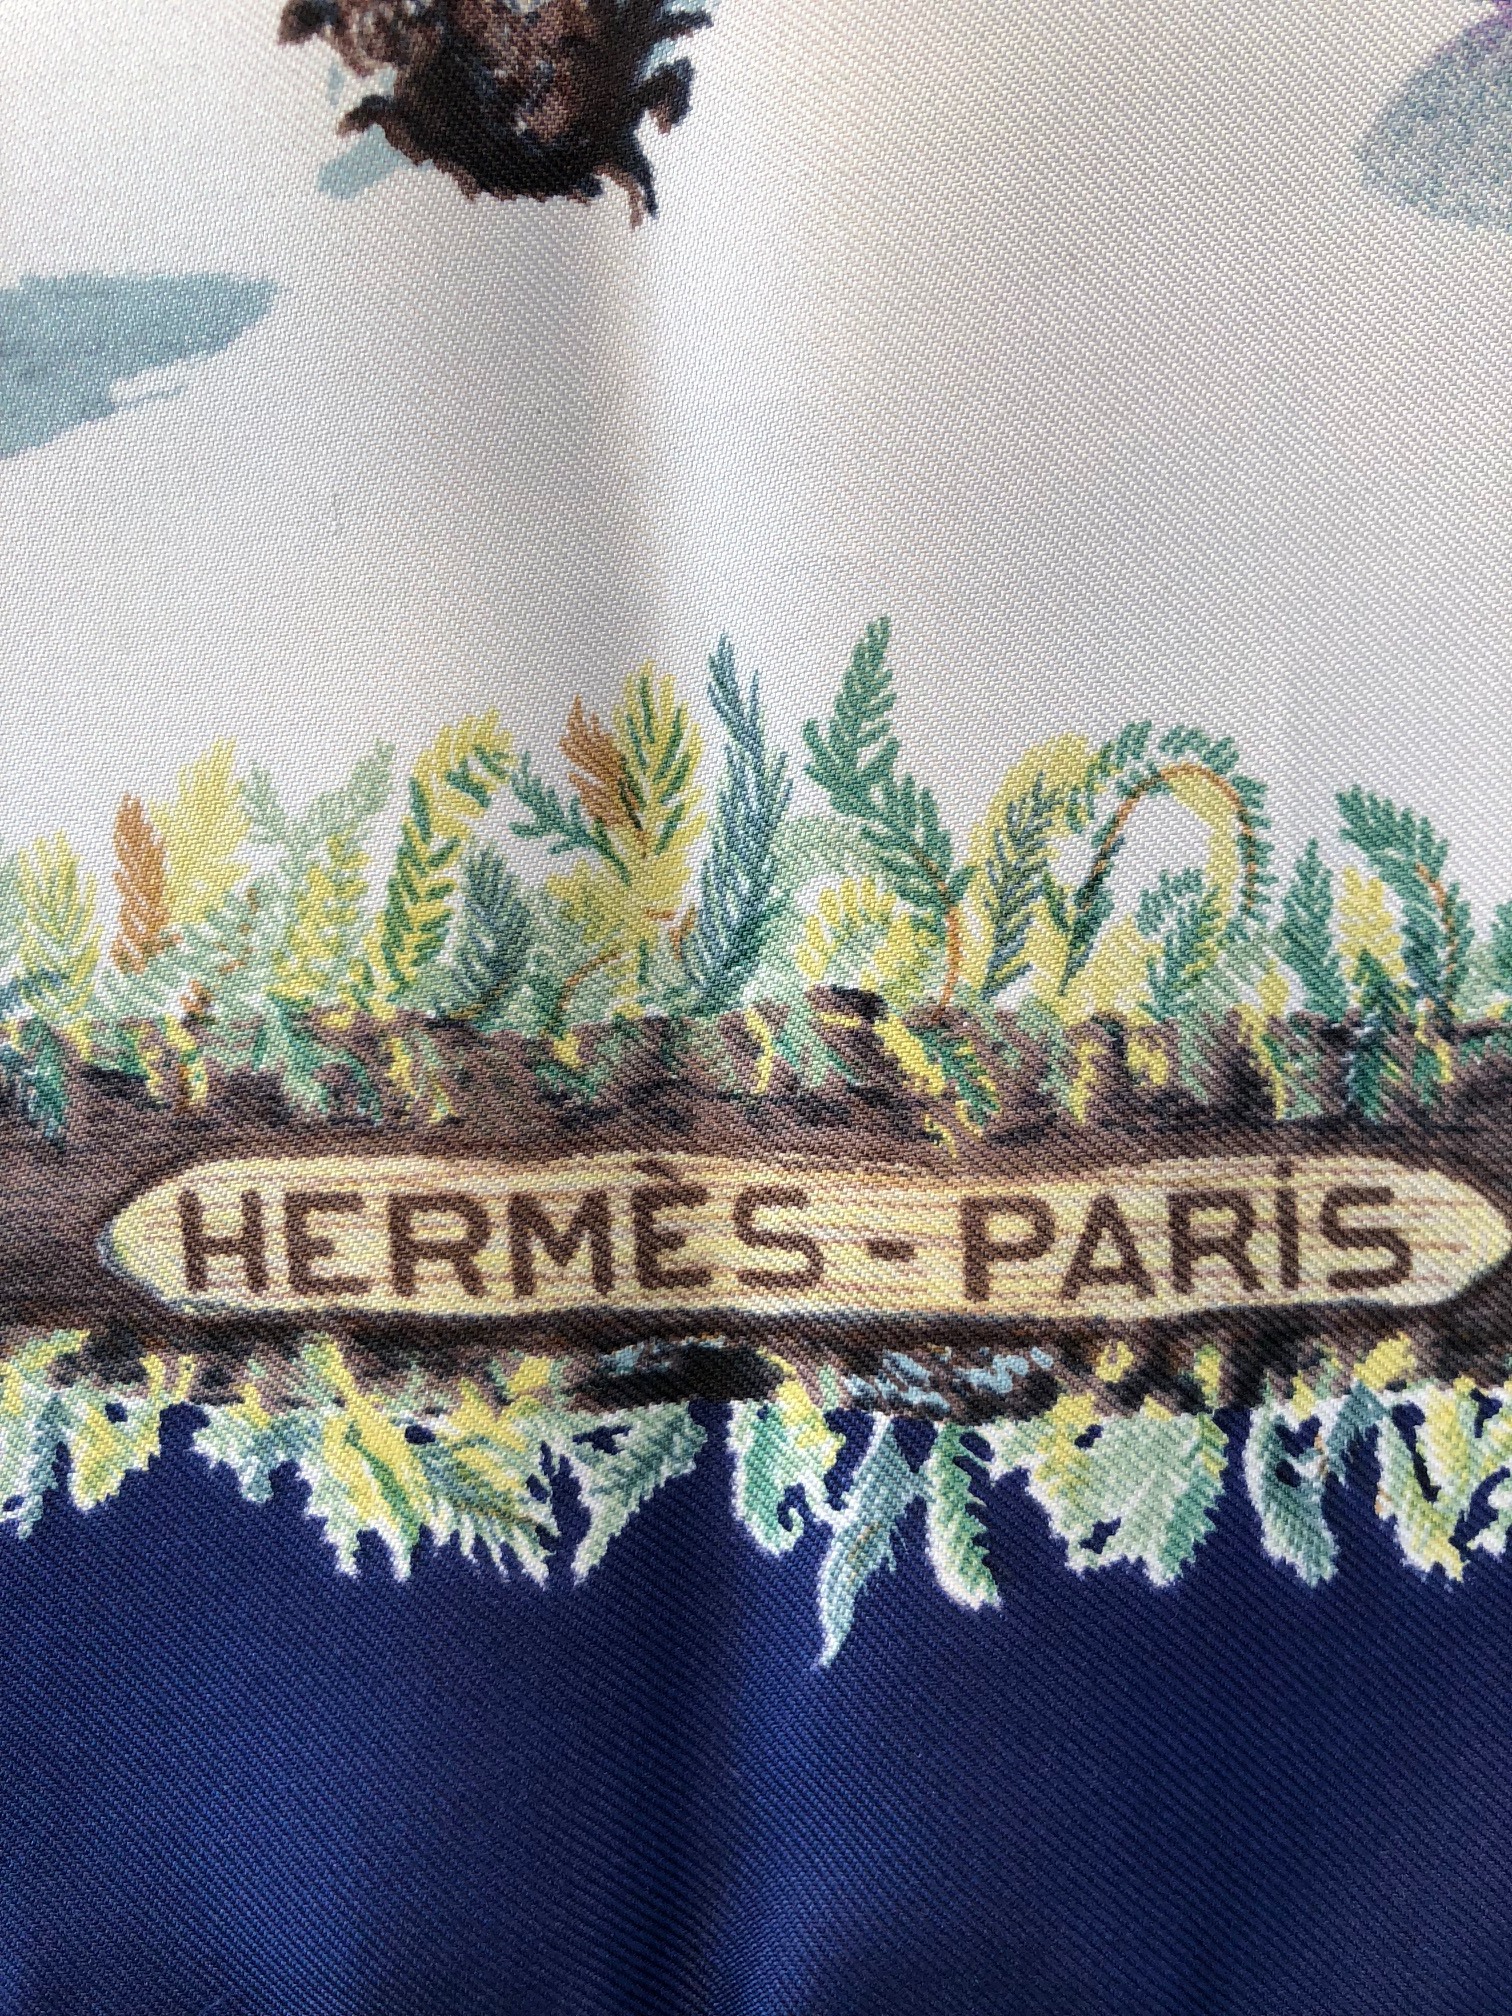 HERMÈS Paris Silk Scarf Champignons Mushrooms